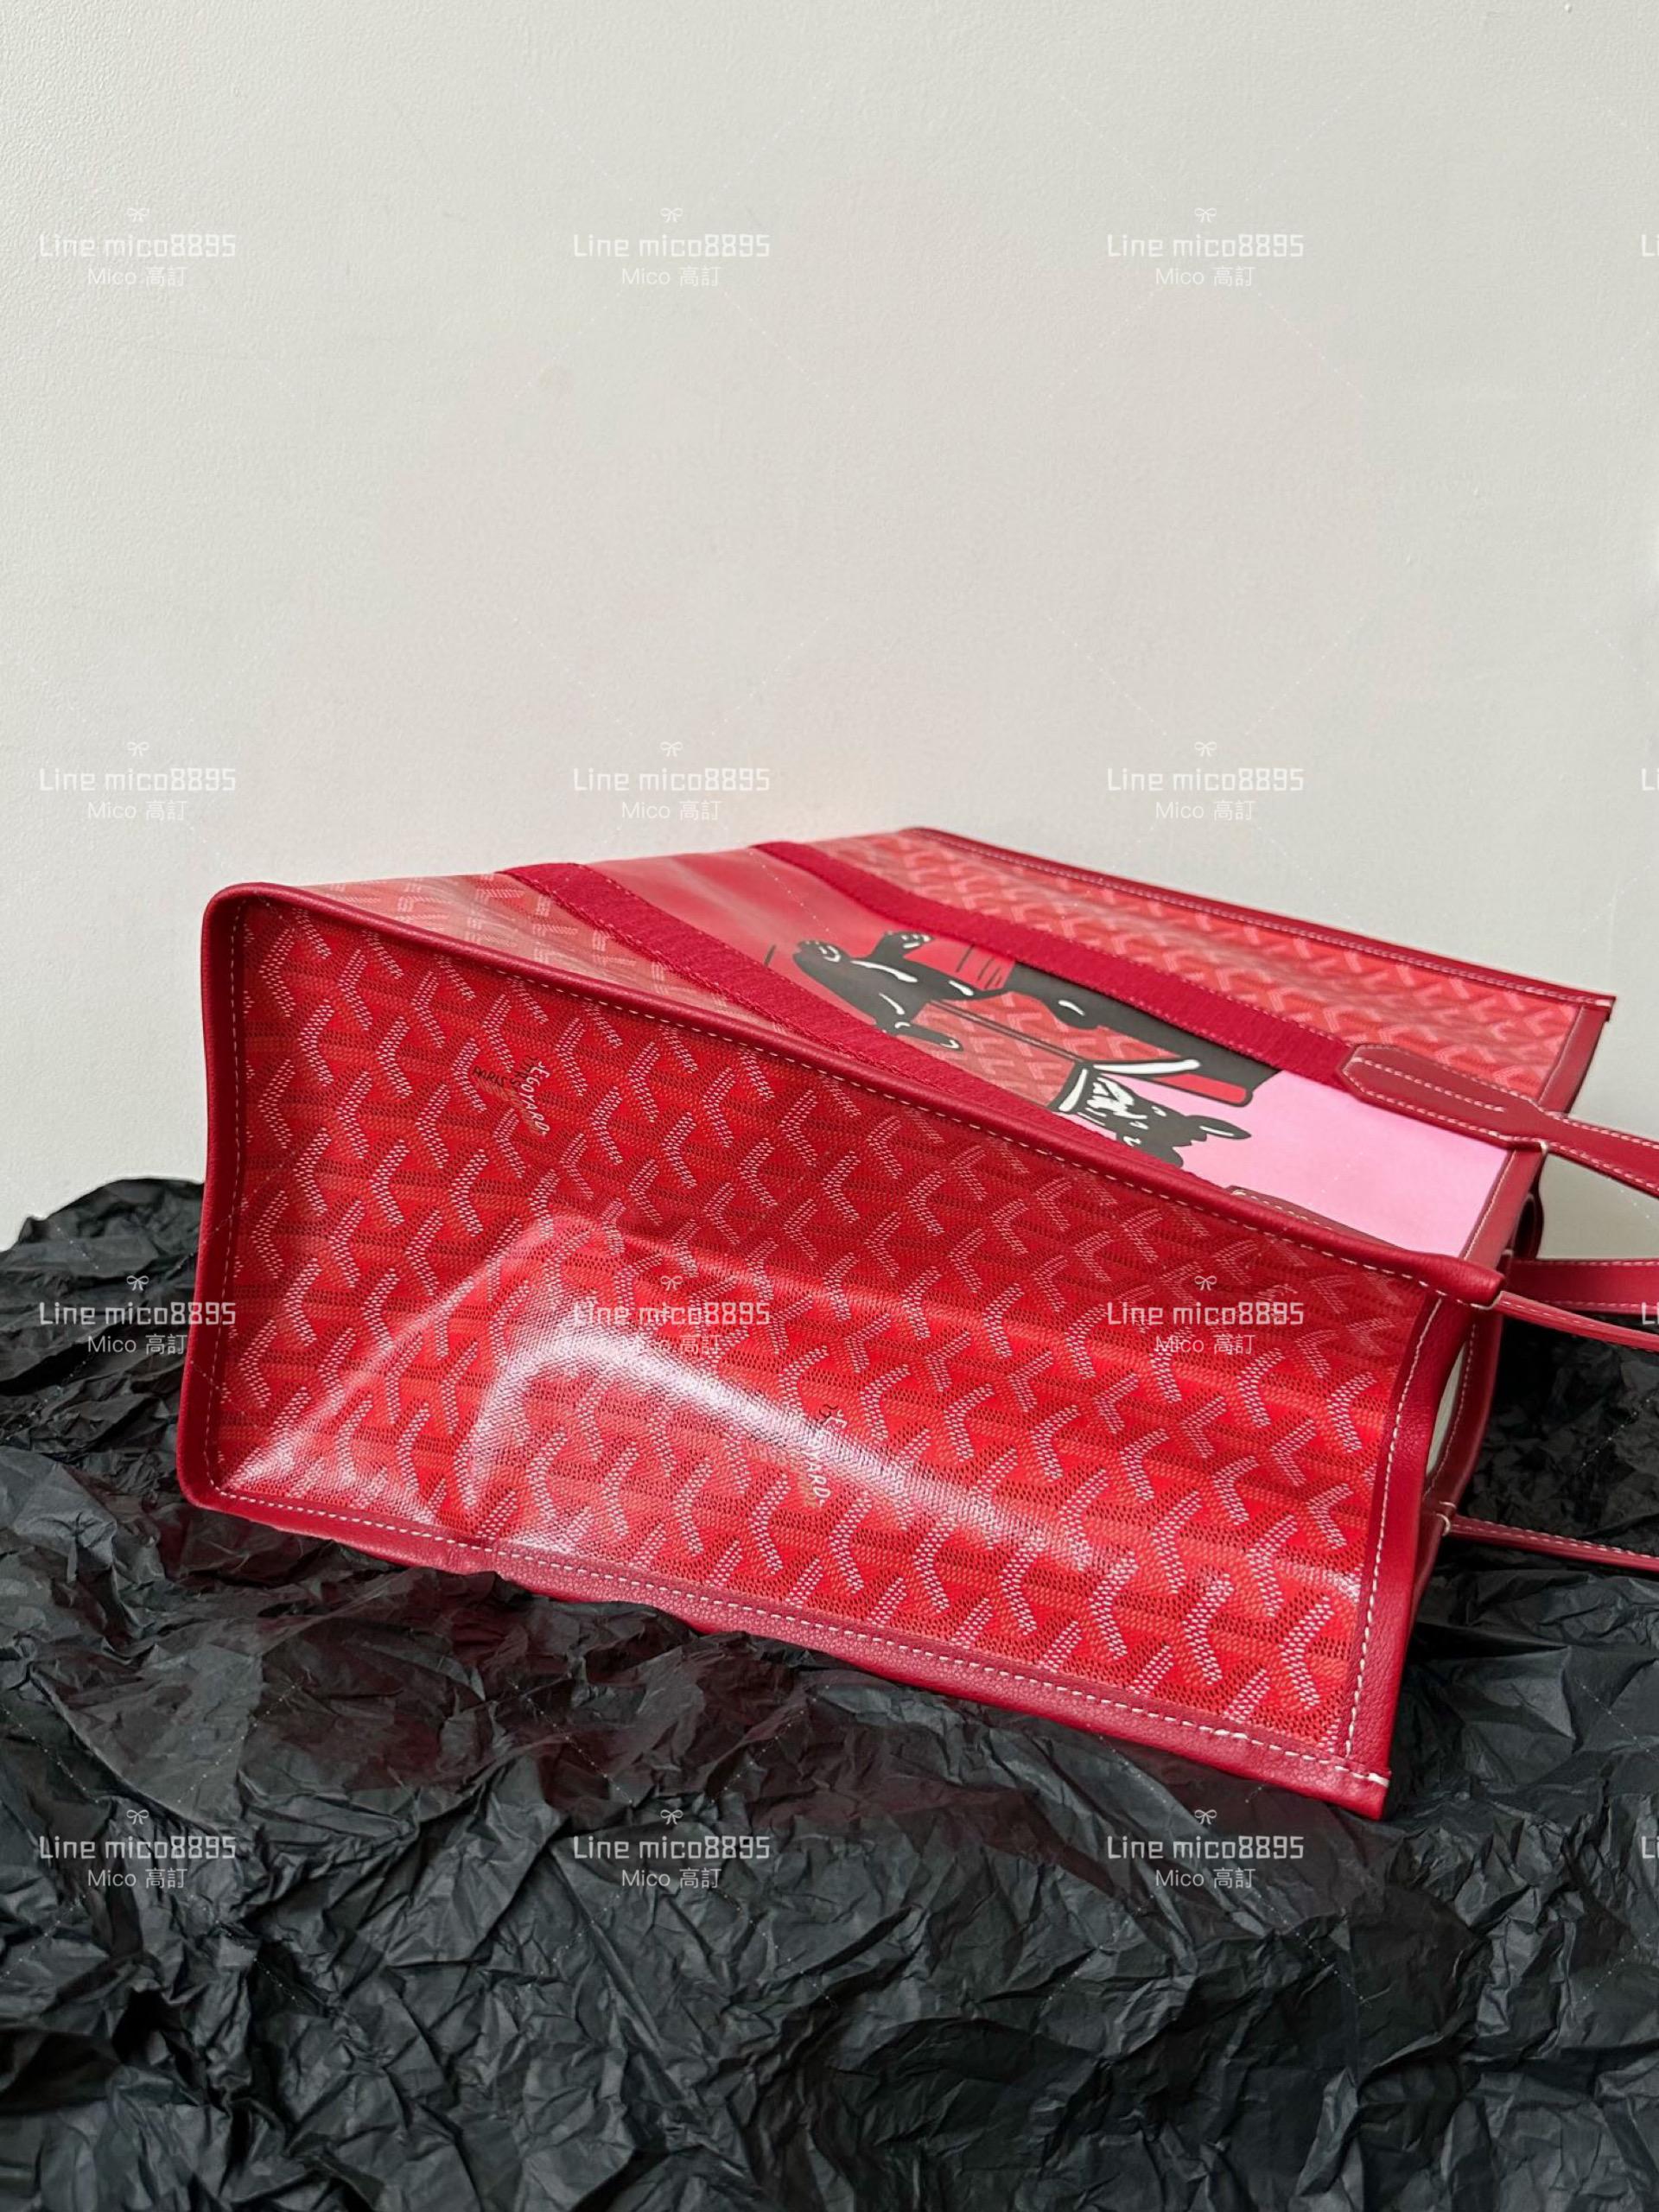 Goyard villette tote彩繪法鬥🐶托特包 暗紅色 寵物包/通勤包/大包 45cm